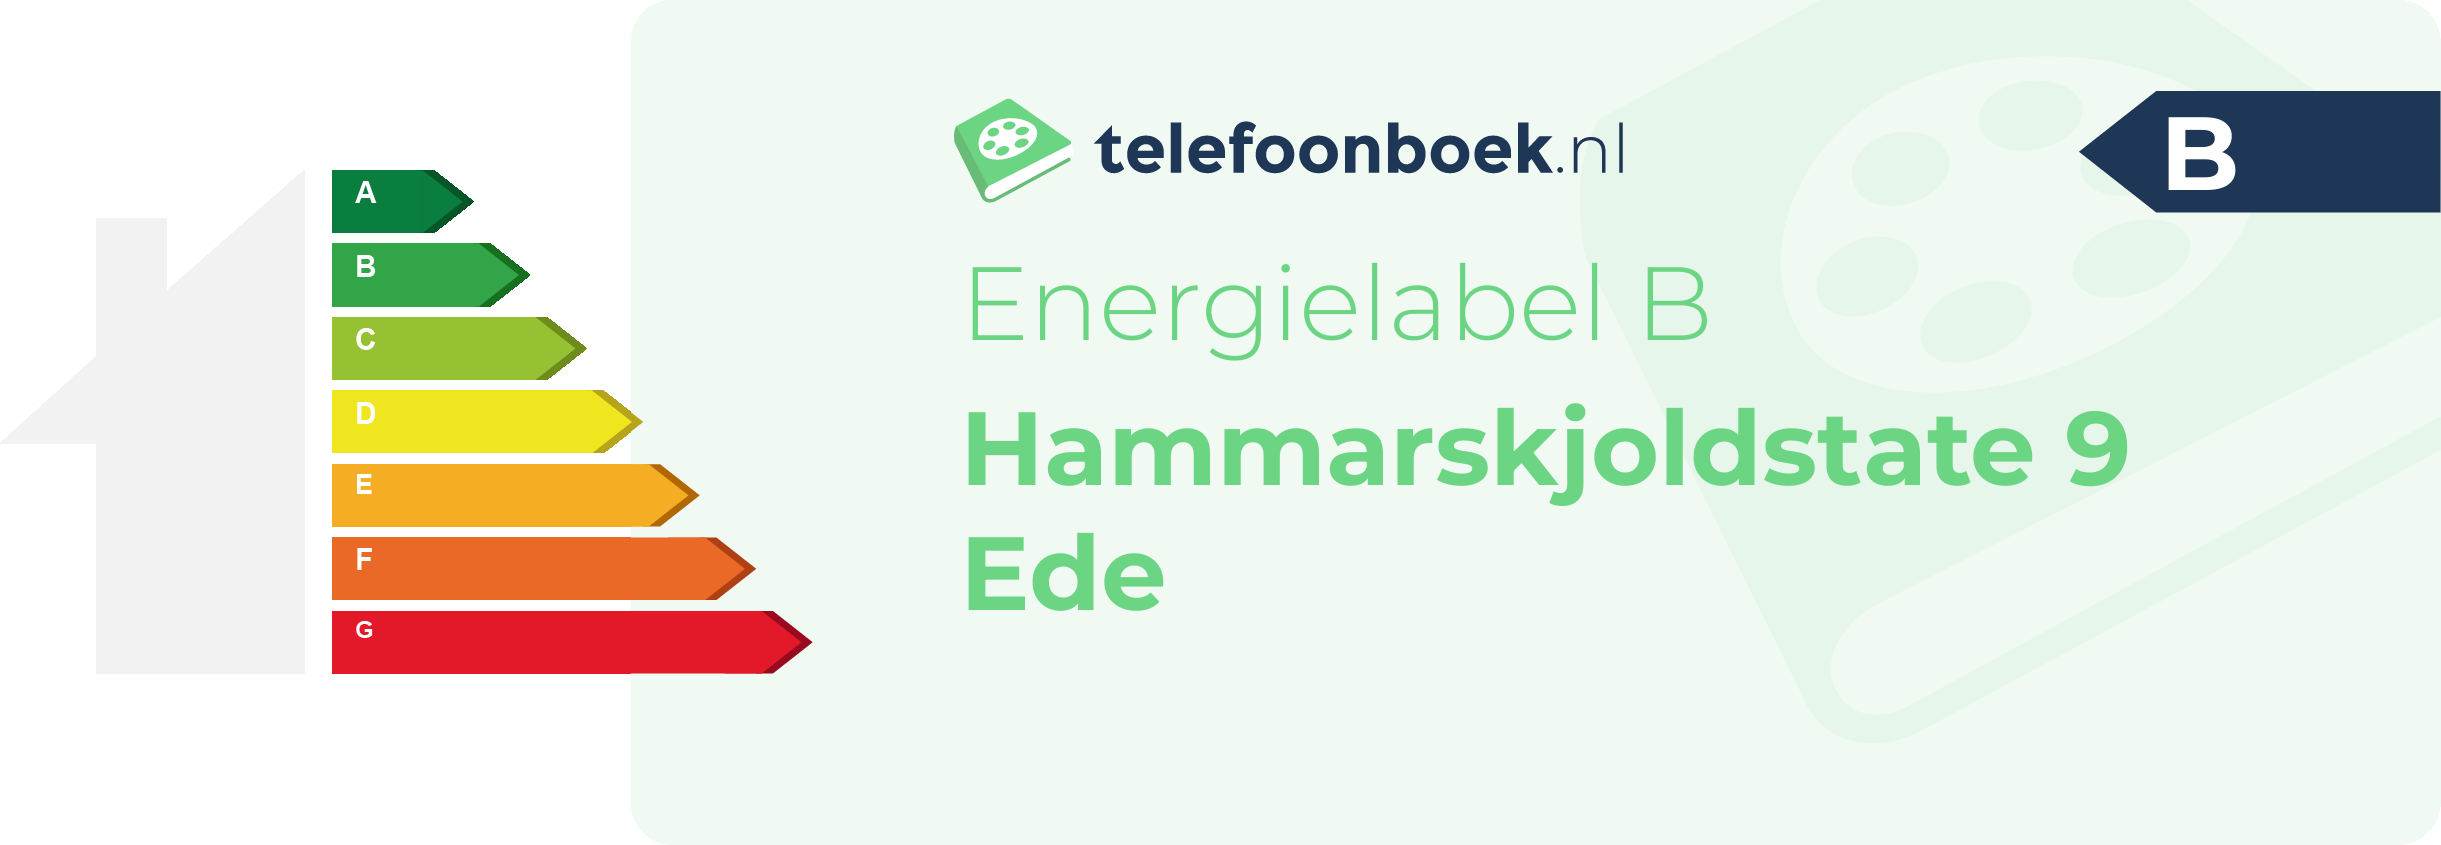 Energielabel Hammarskjoldstate 9 Ede